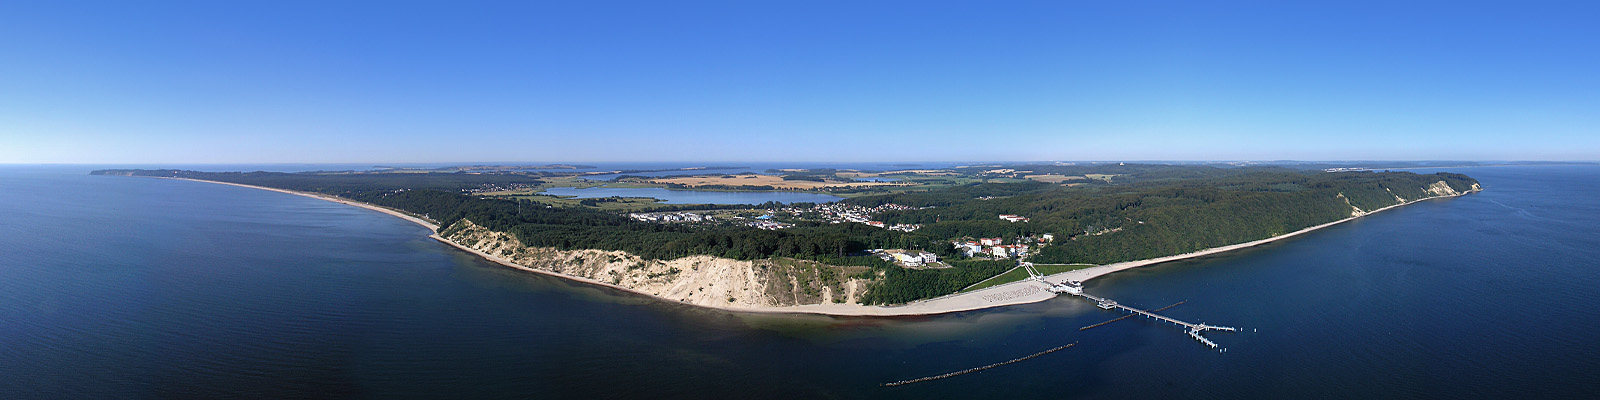 Panorama: Sellin Luftbild - Motivnummer: rug-sel-100